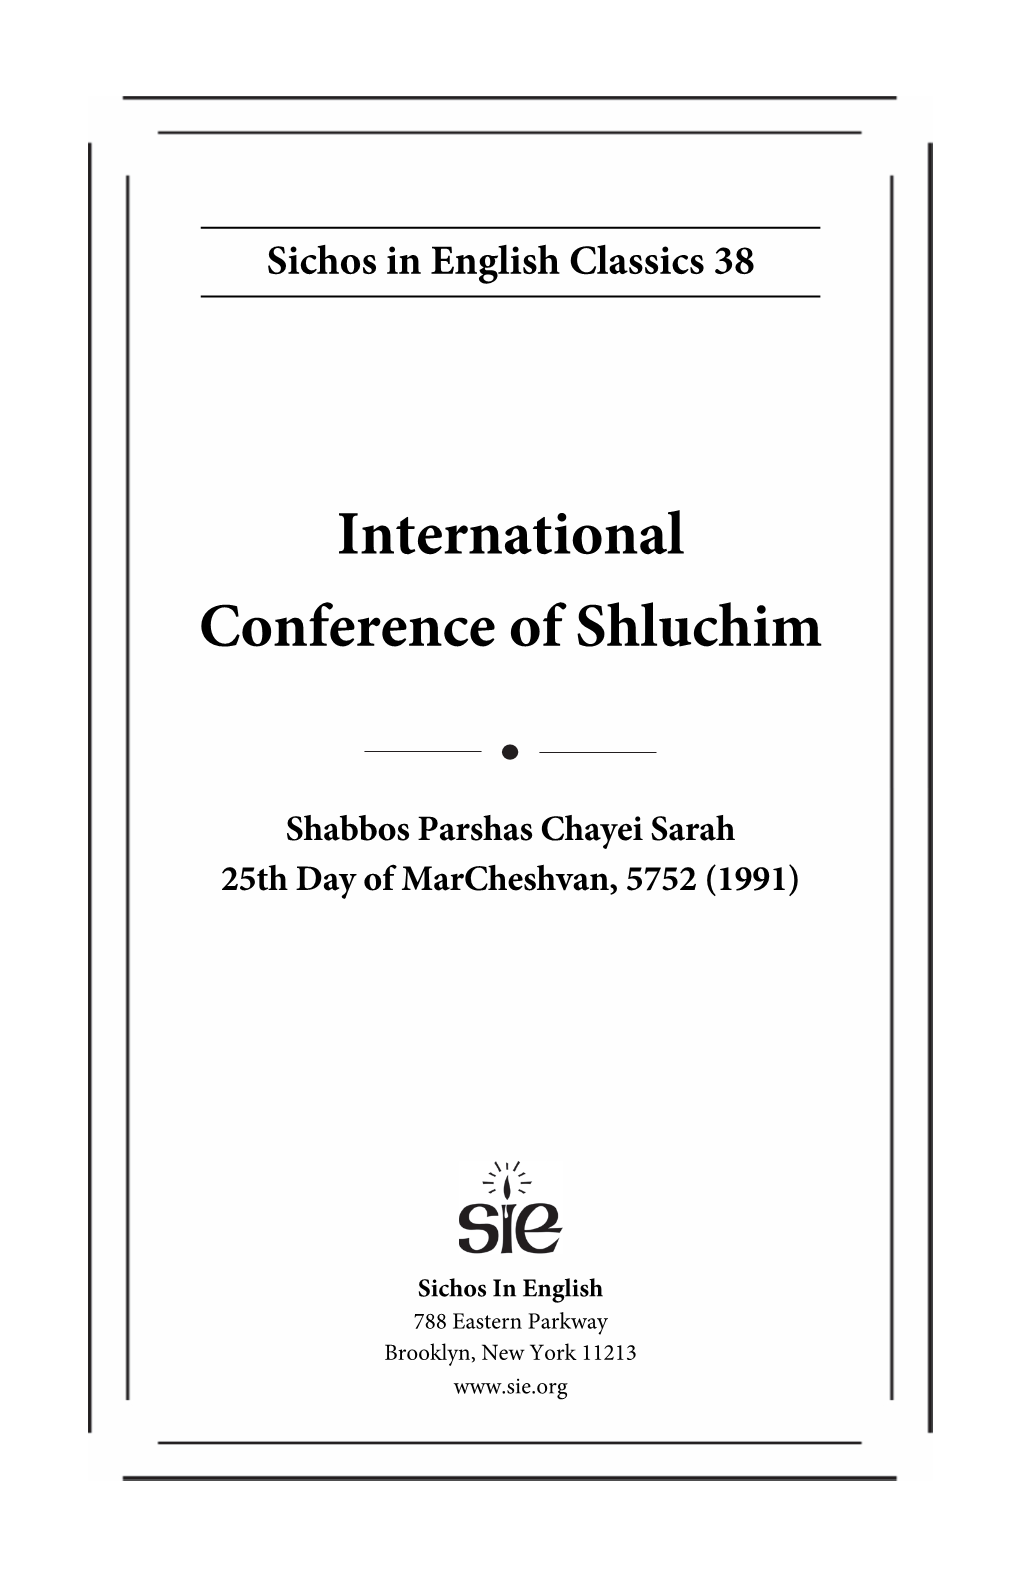 International Conference of Shluchim